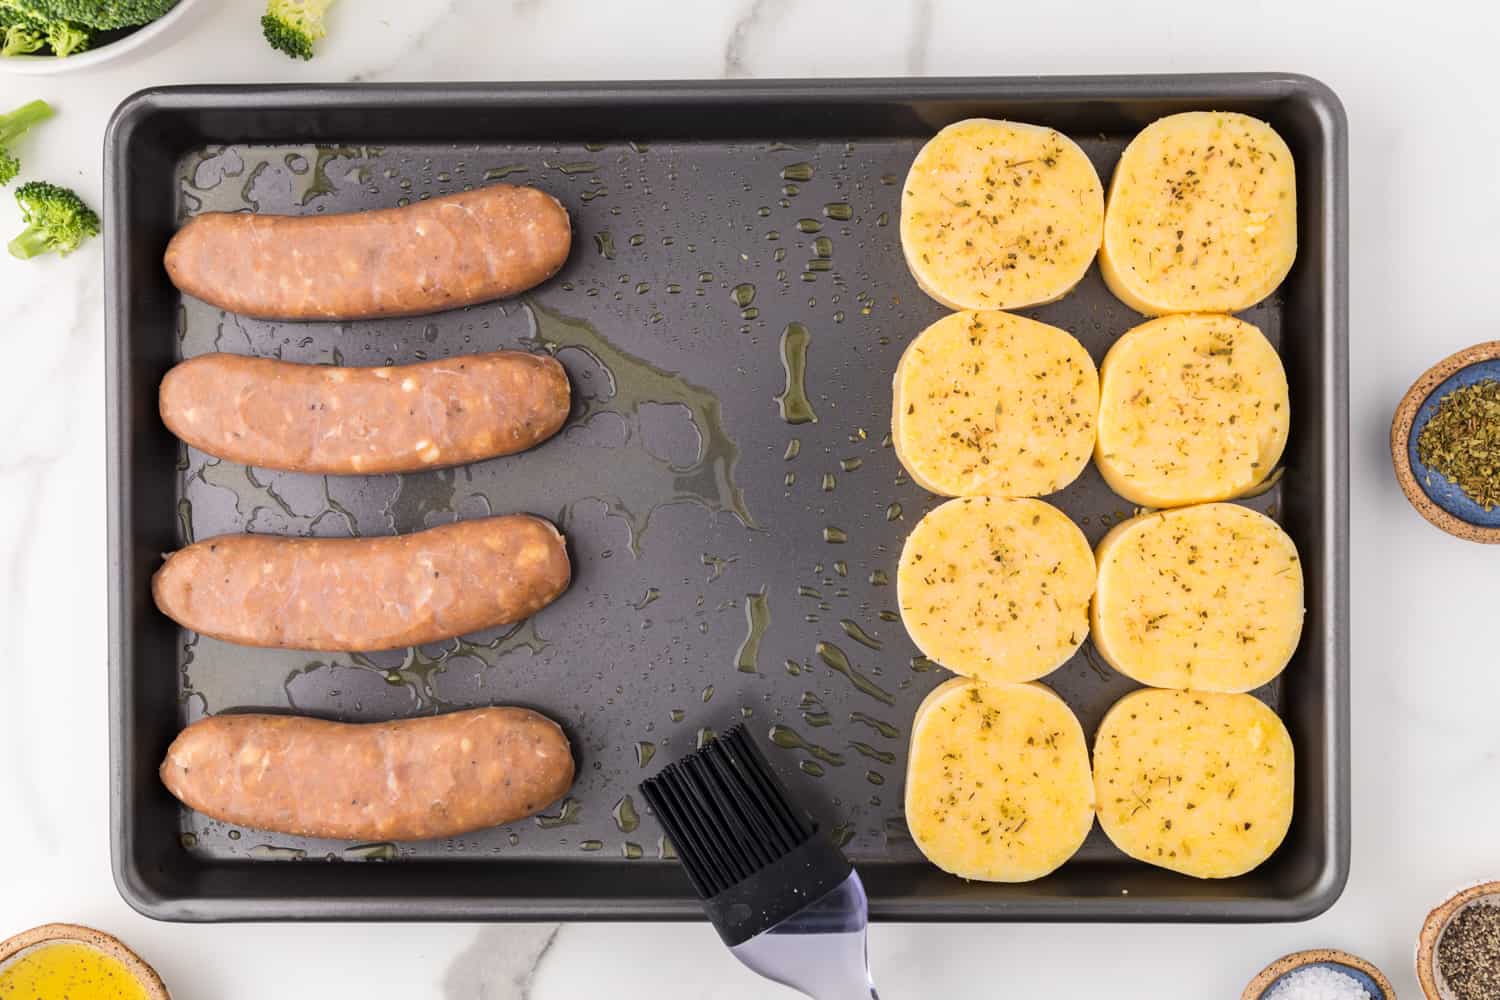 Sausage added to pan.